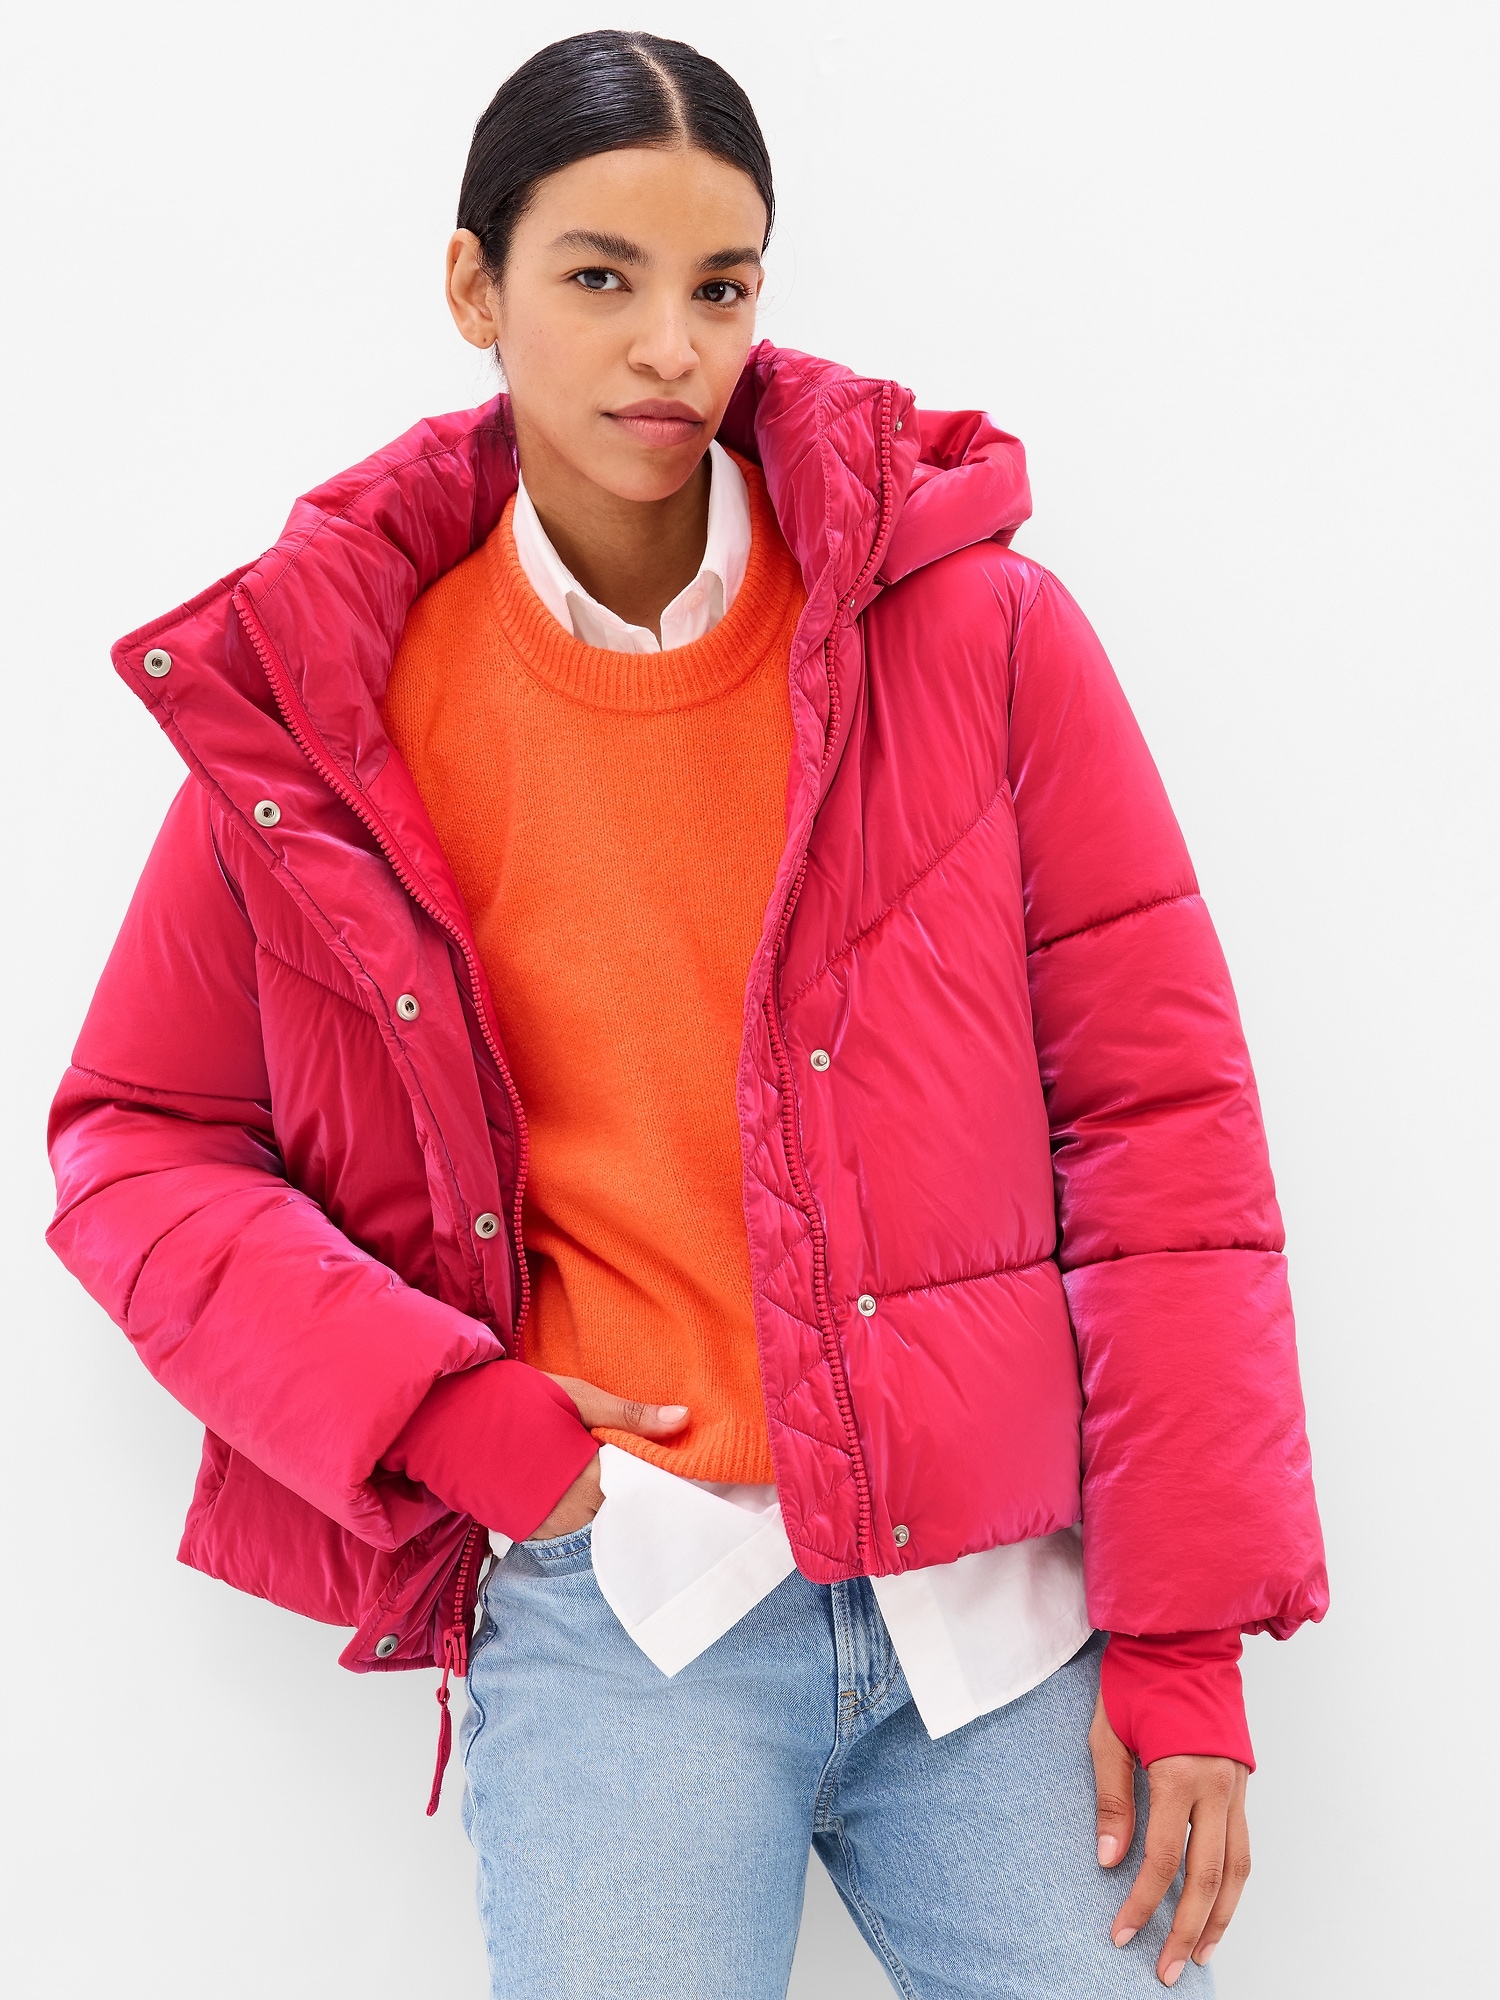 Gap Big Puff Cropped Jacket In Super Neon Pink